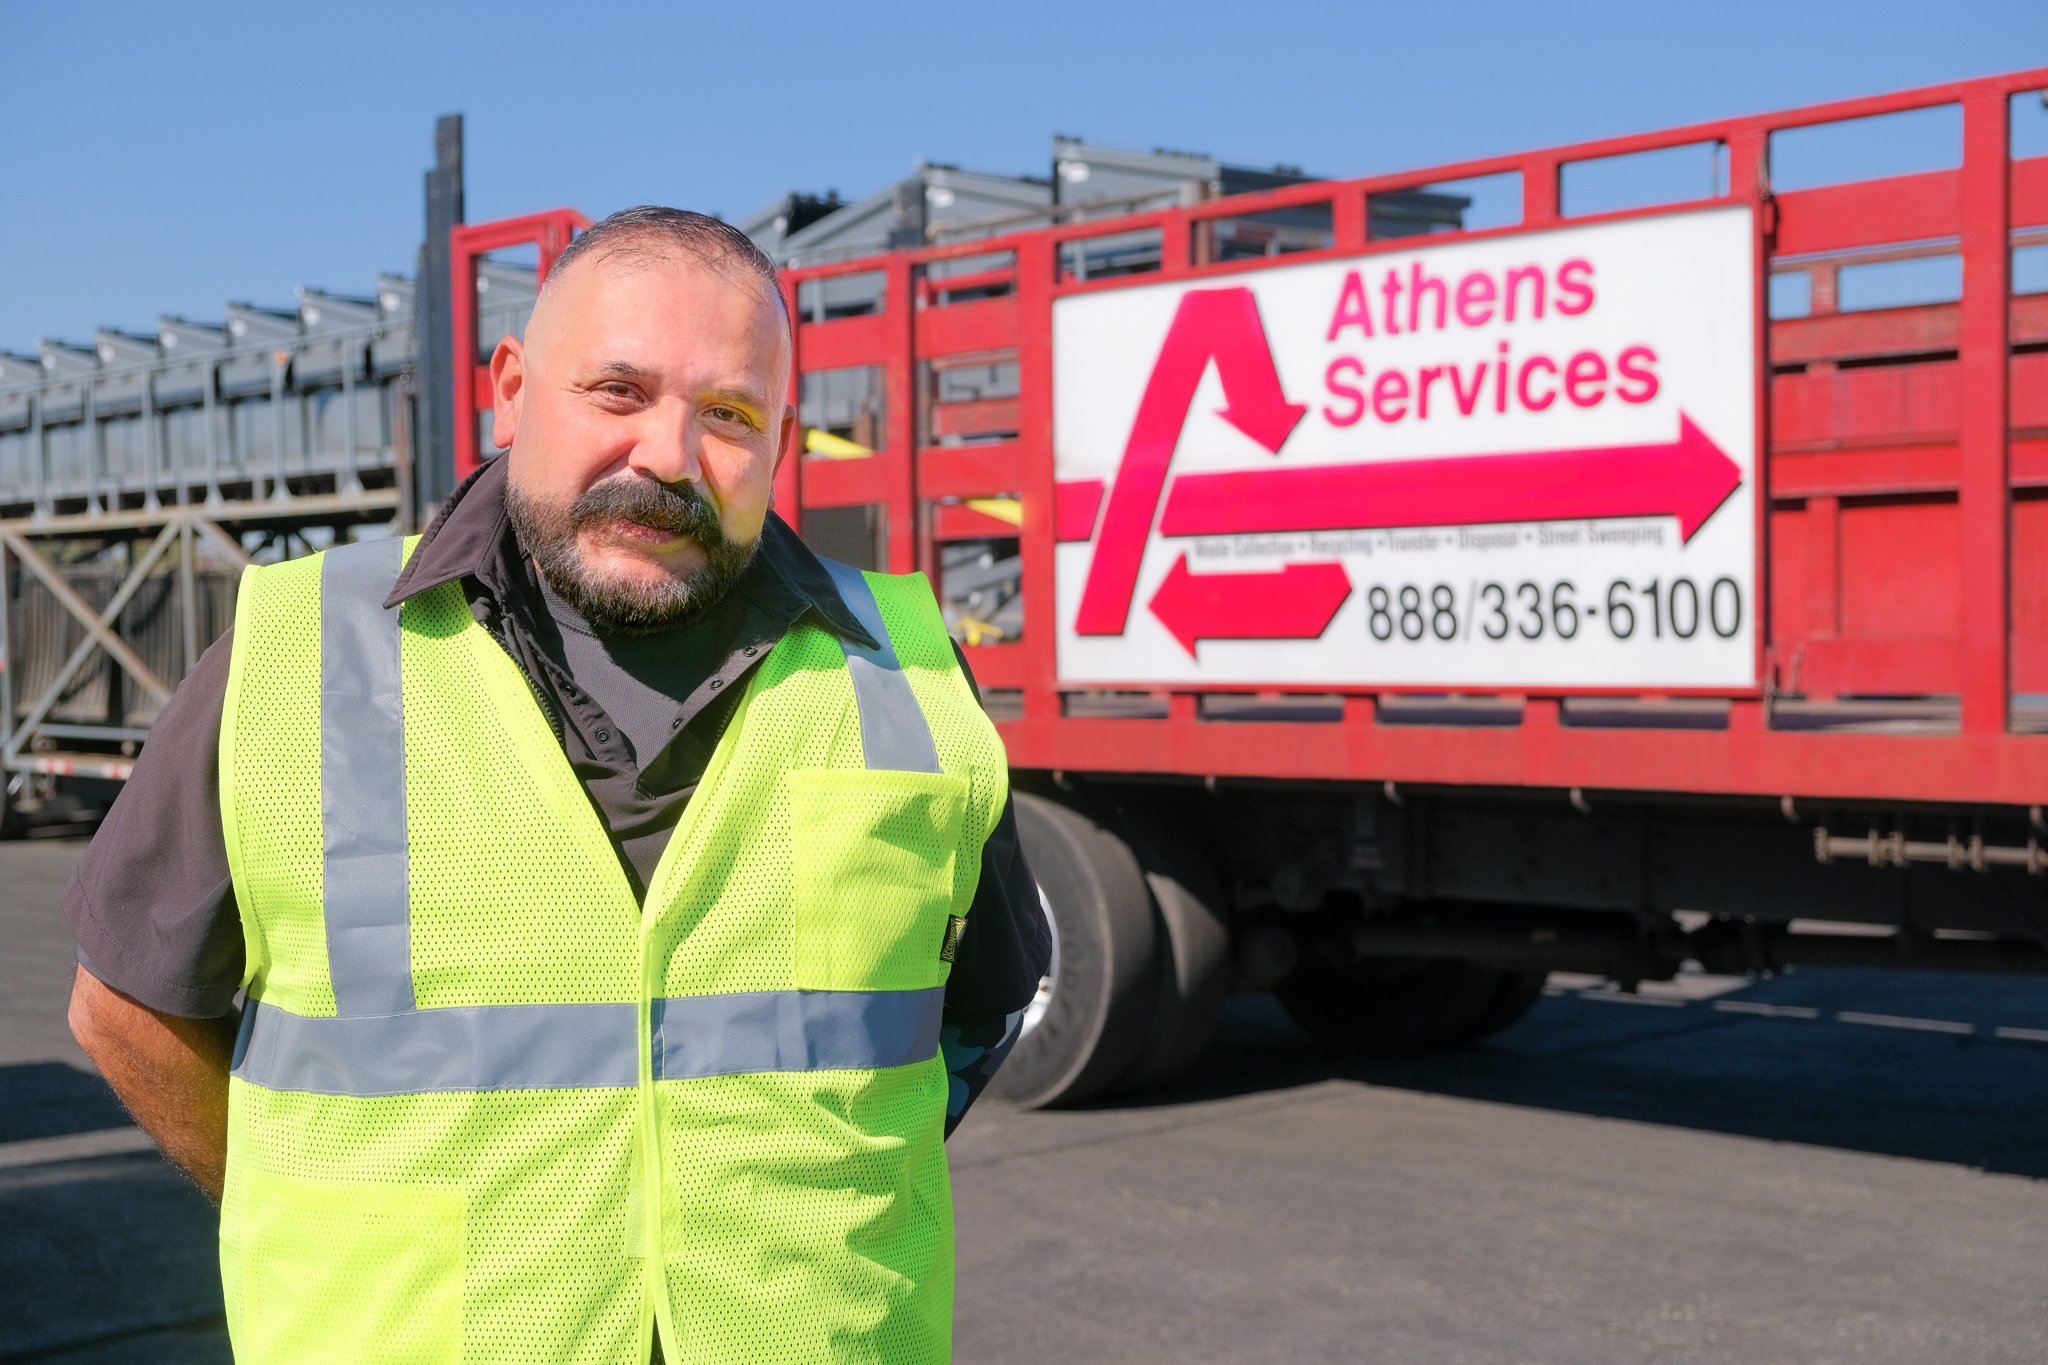 Milk Jugs - Athens Services 3-Bin Program